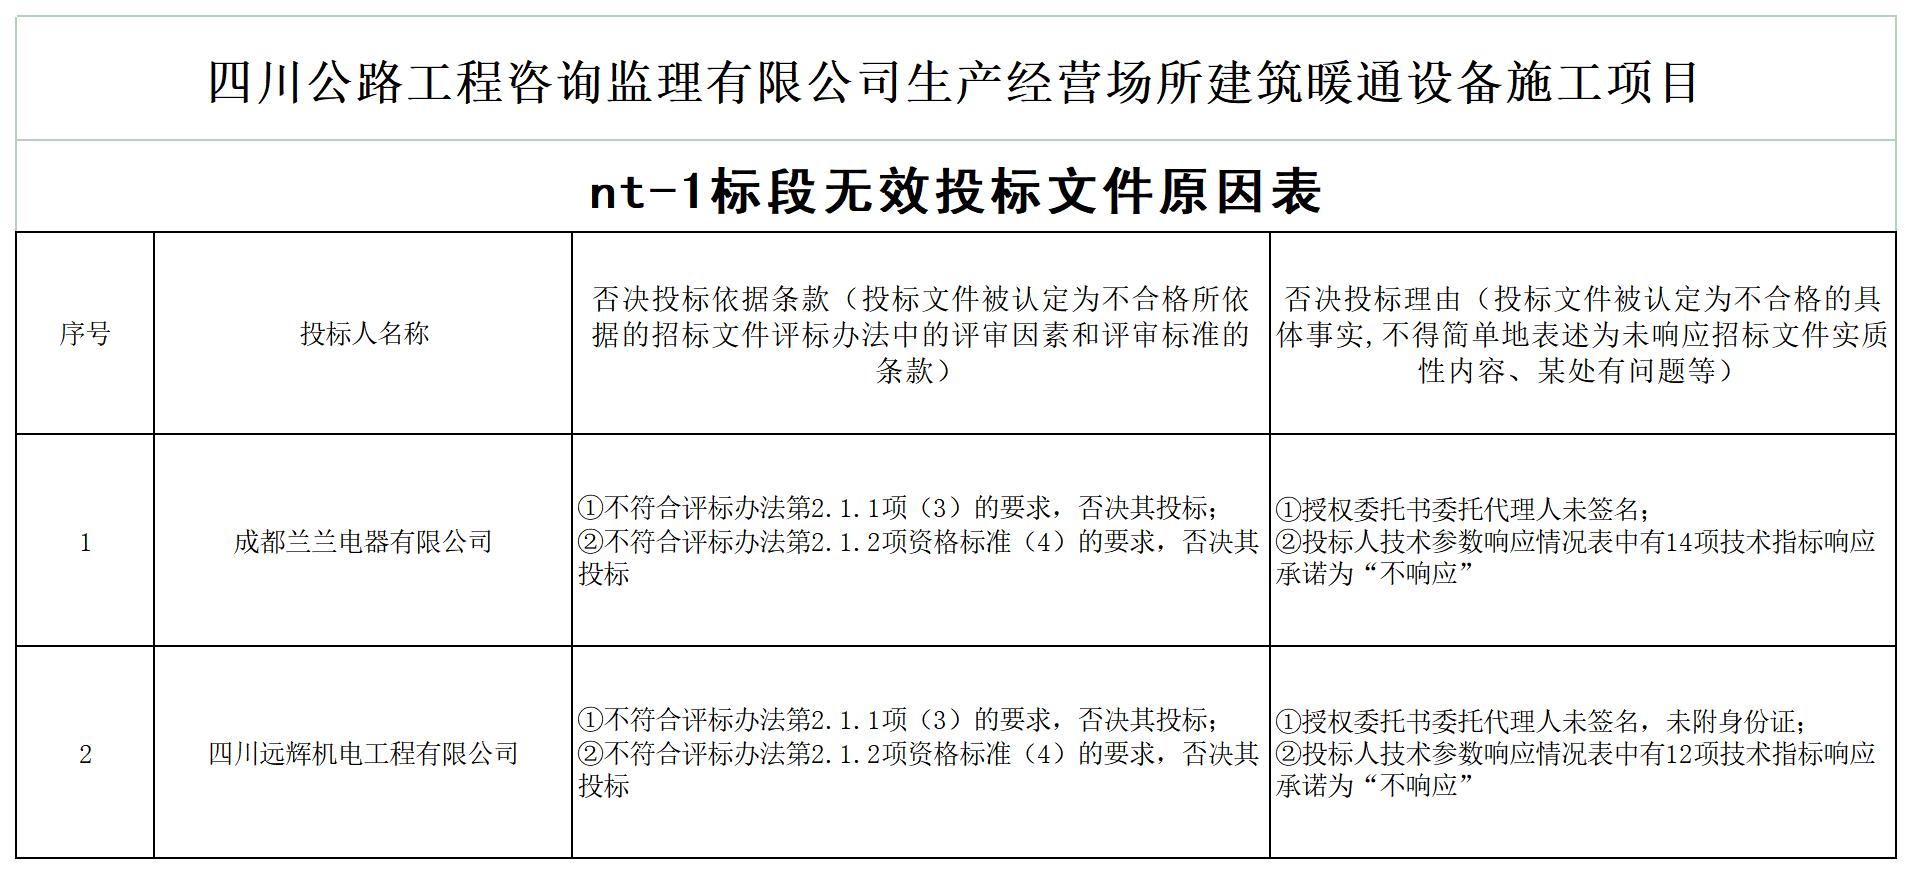 HTH华体会·(中国)官方网站生产经营场所建筑暖通设备施工项目中标候选人公示_A1E5.jpg